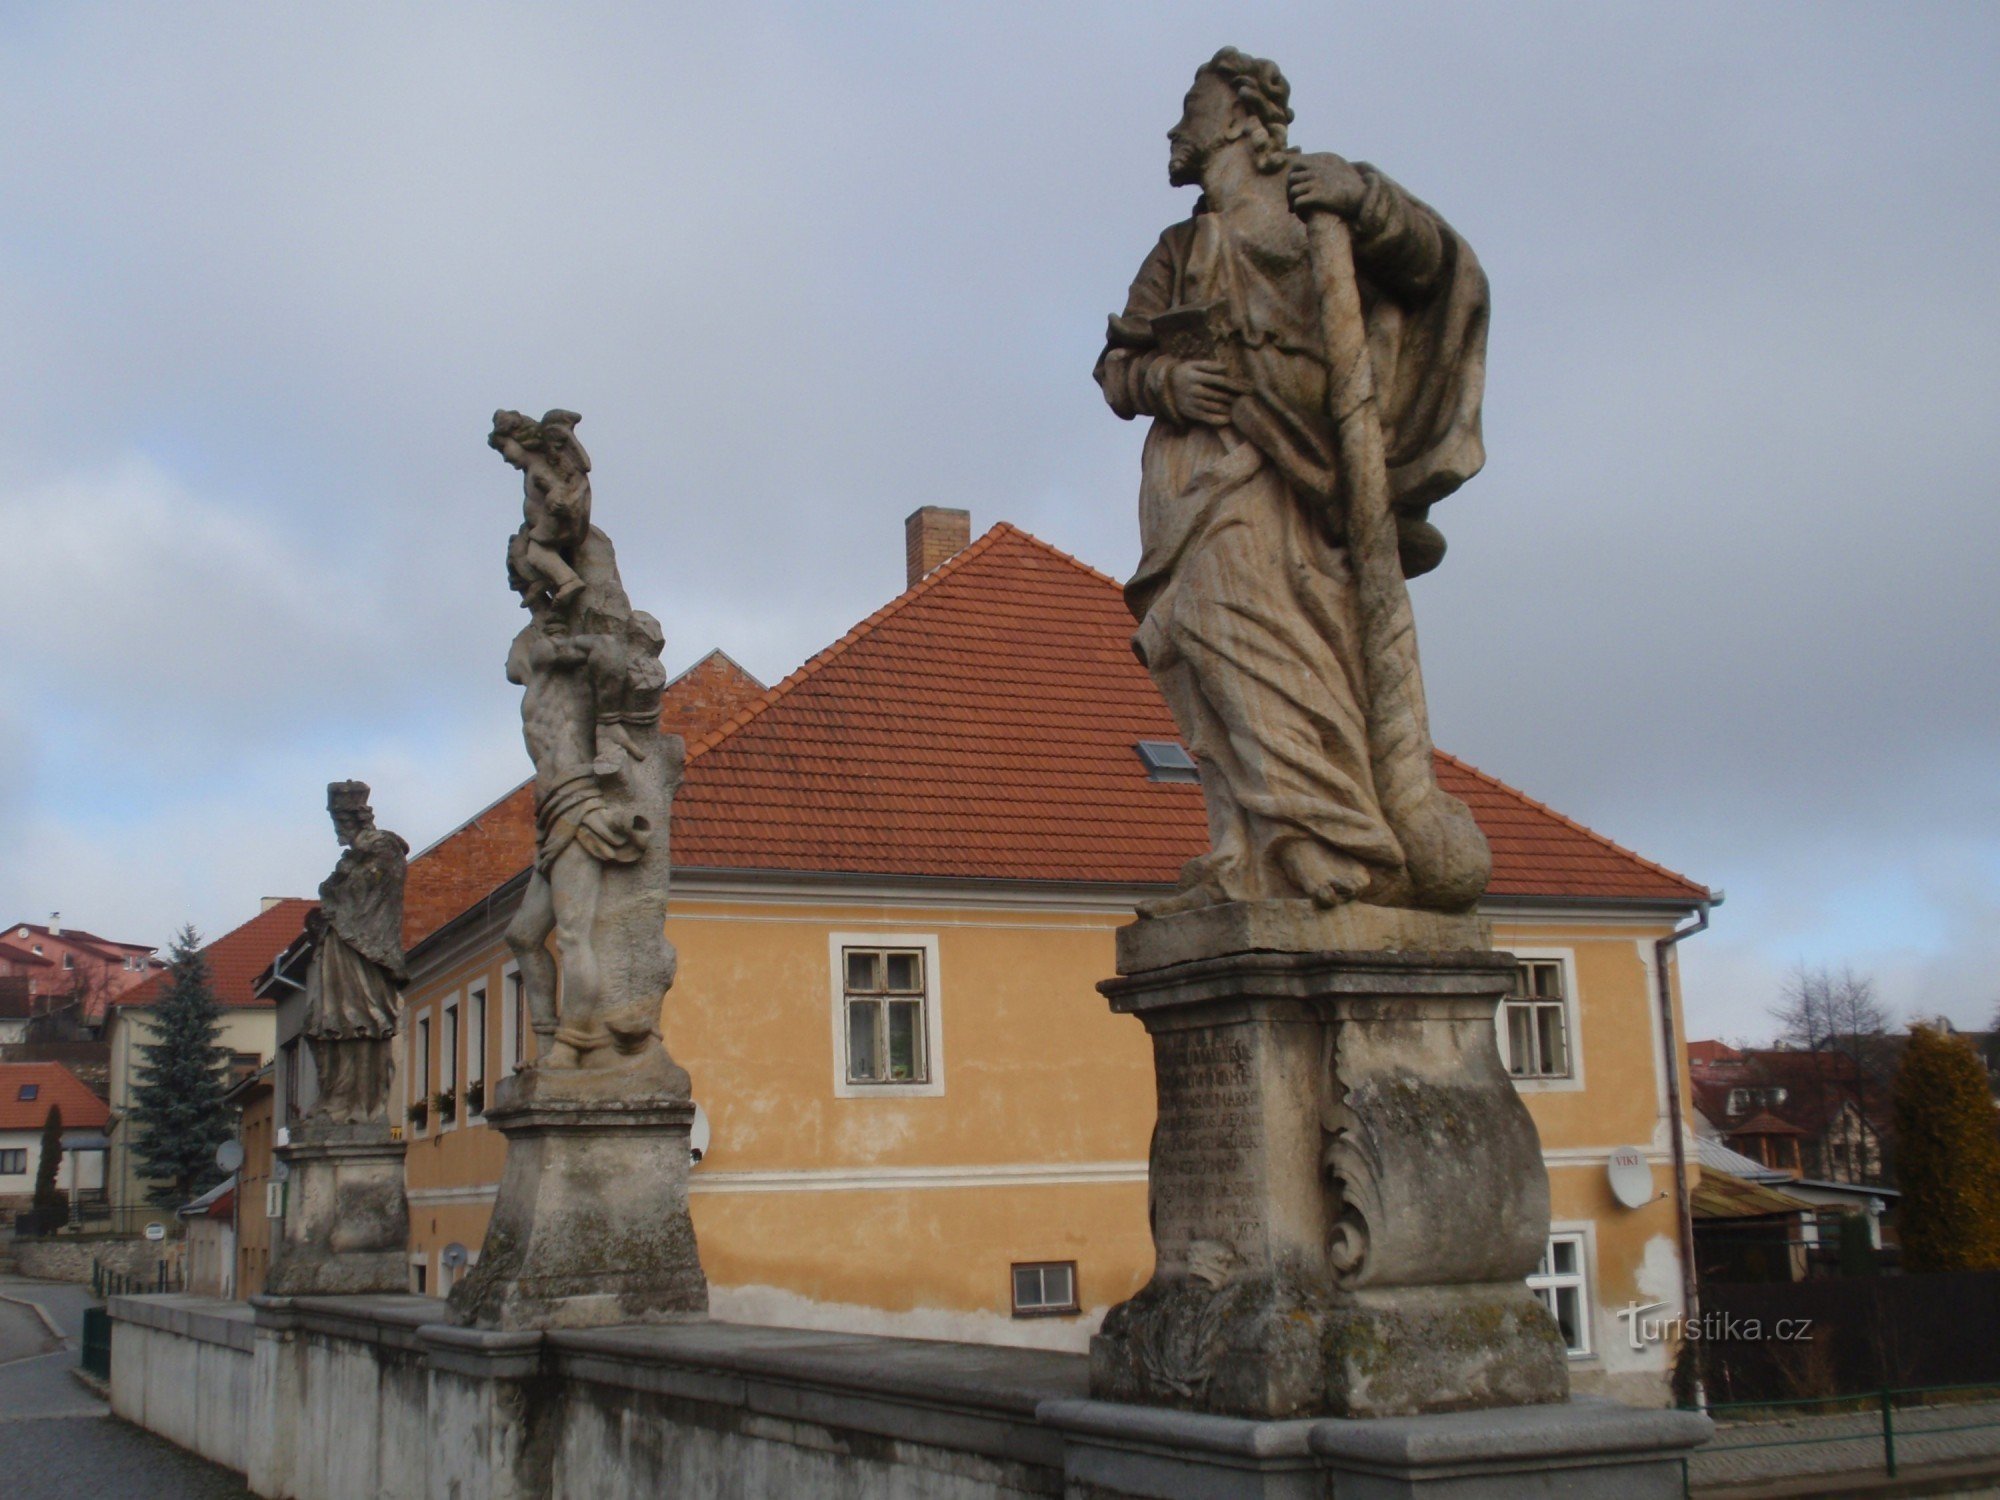 Sculptural decoration of the bridge under the castle in Brtnice near Jihlava